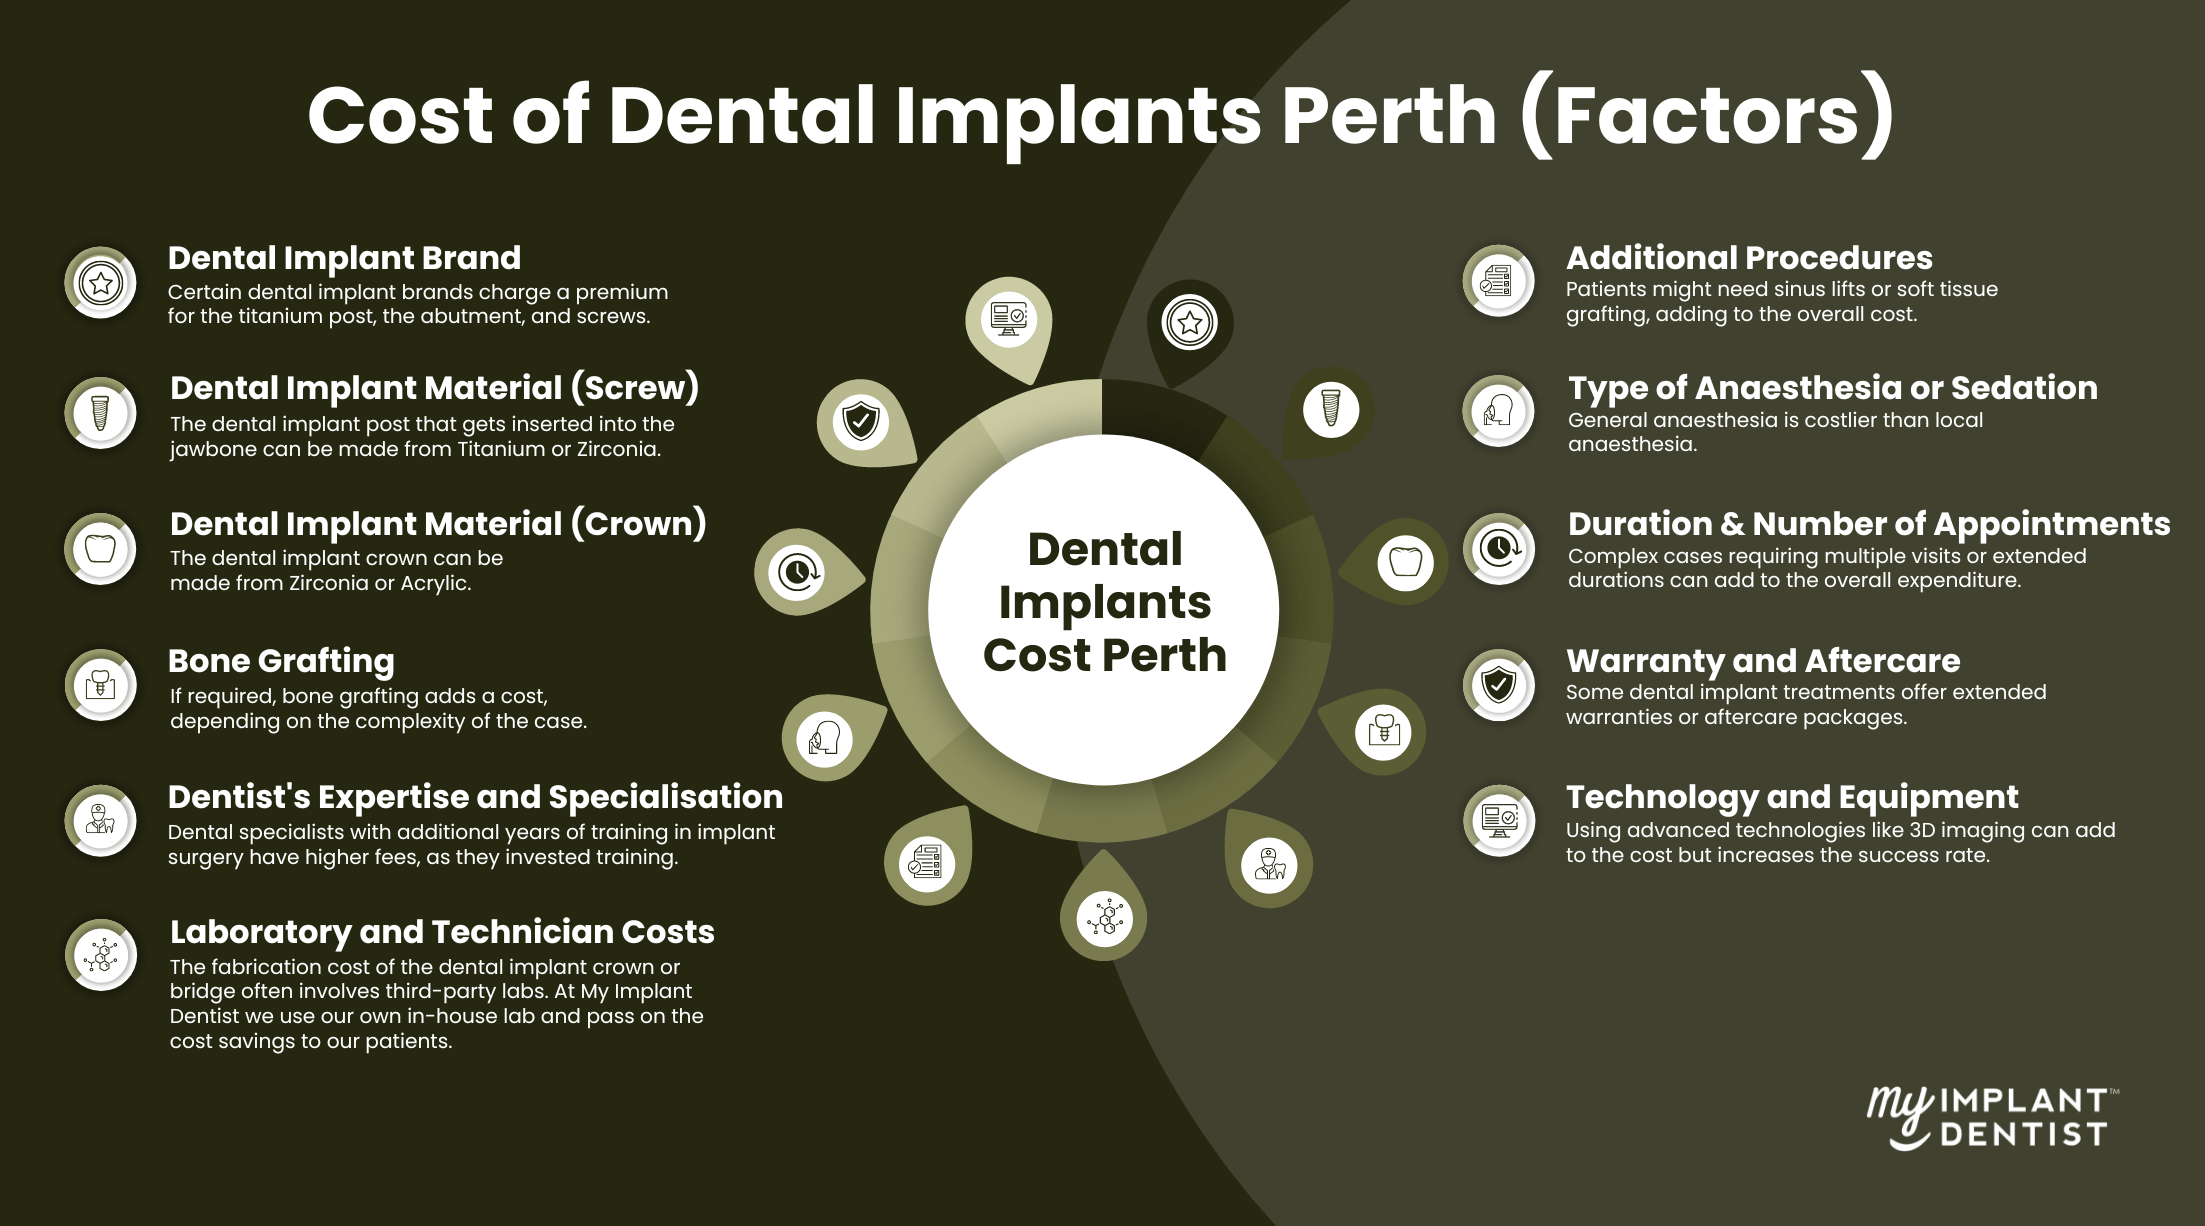 Factors for Dental Implants Cost Perth